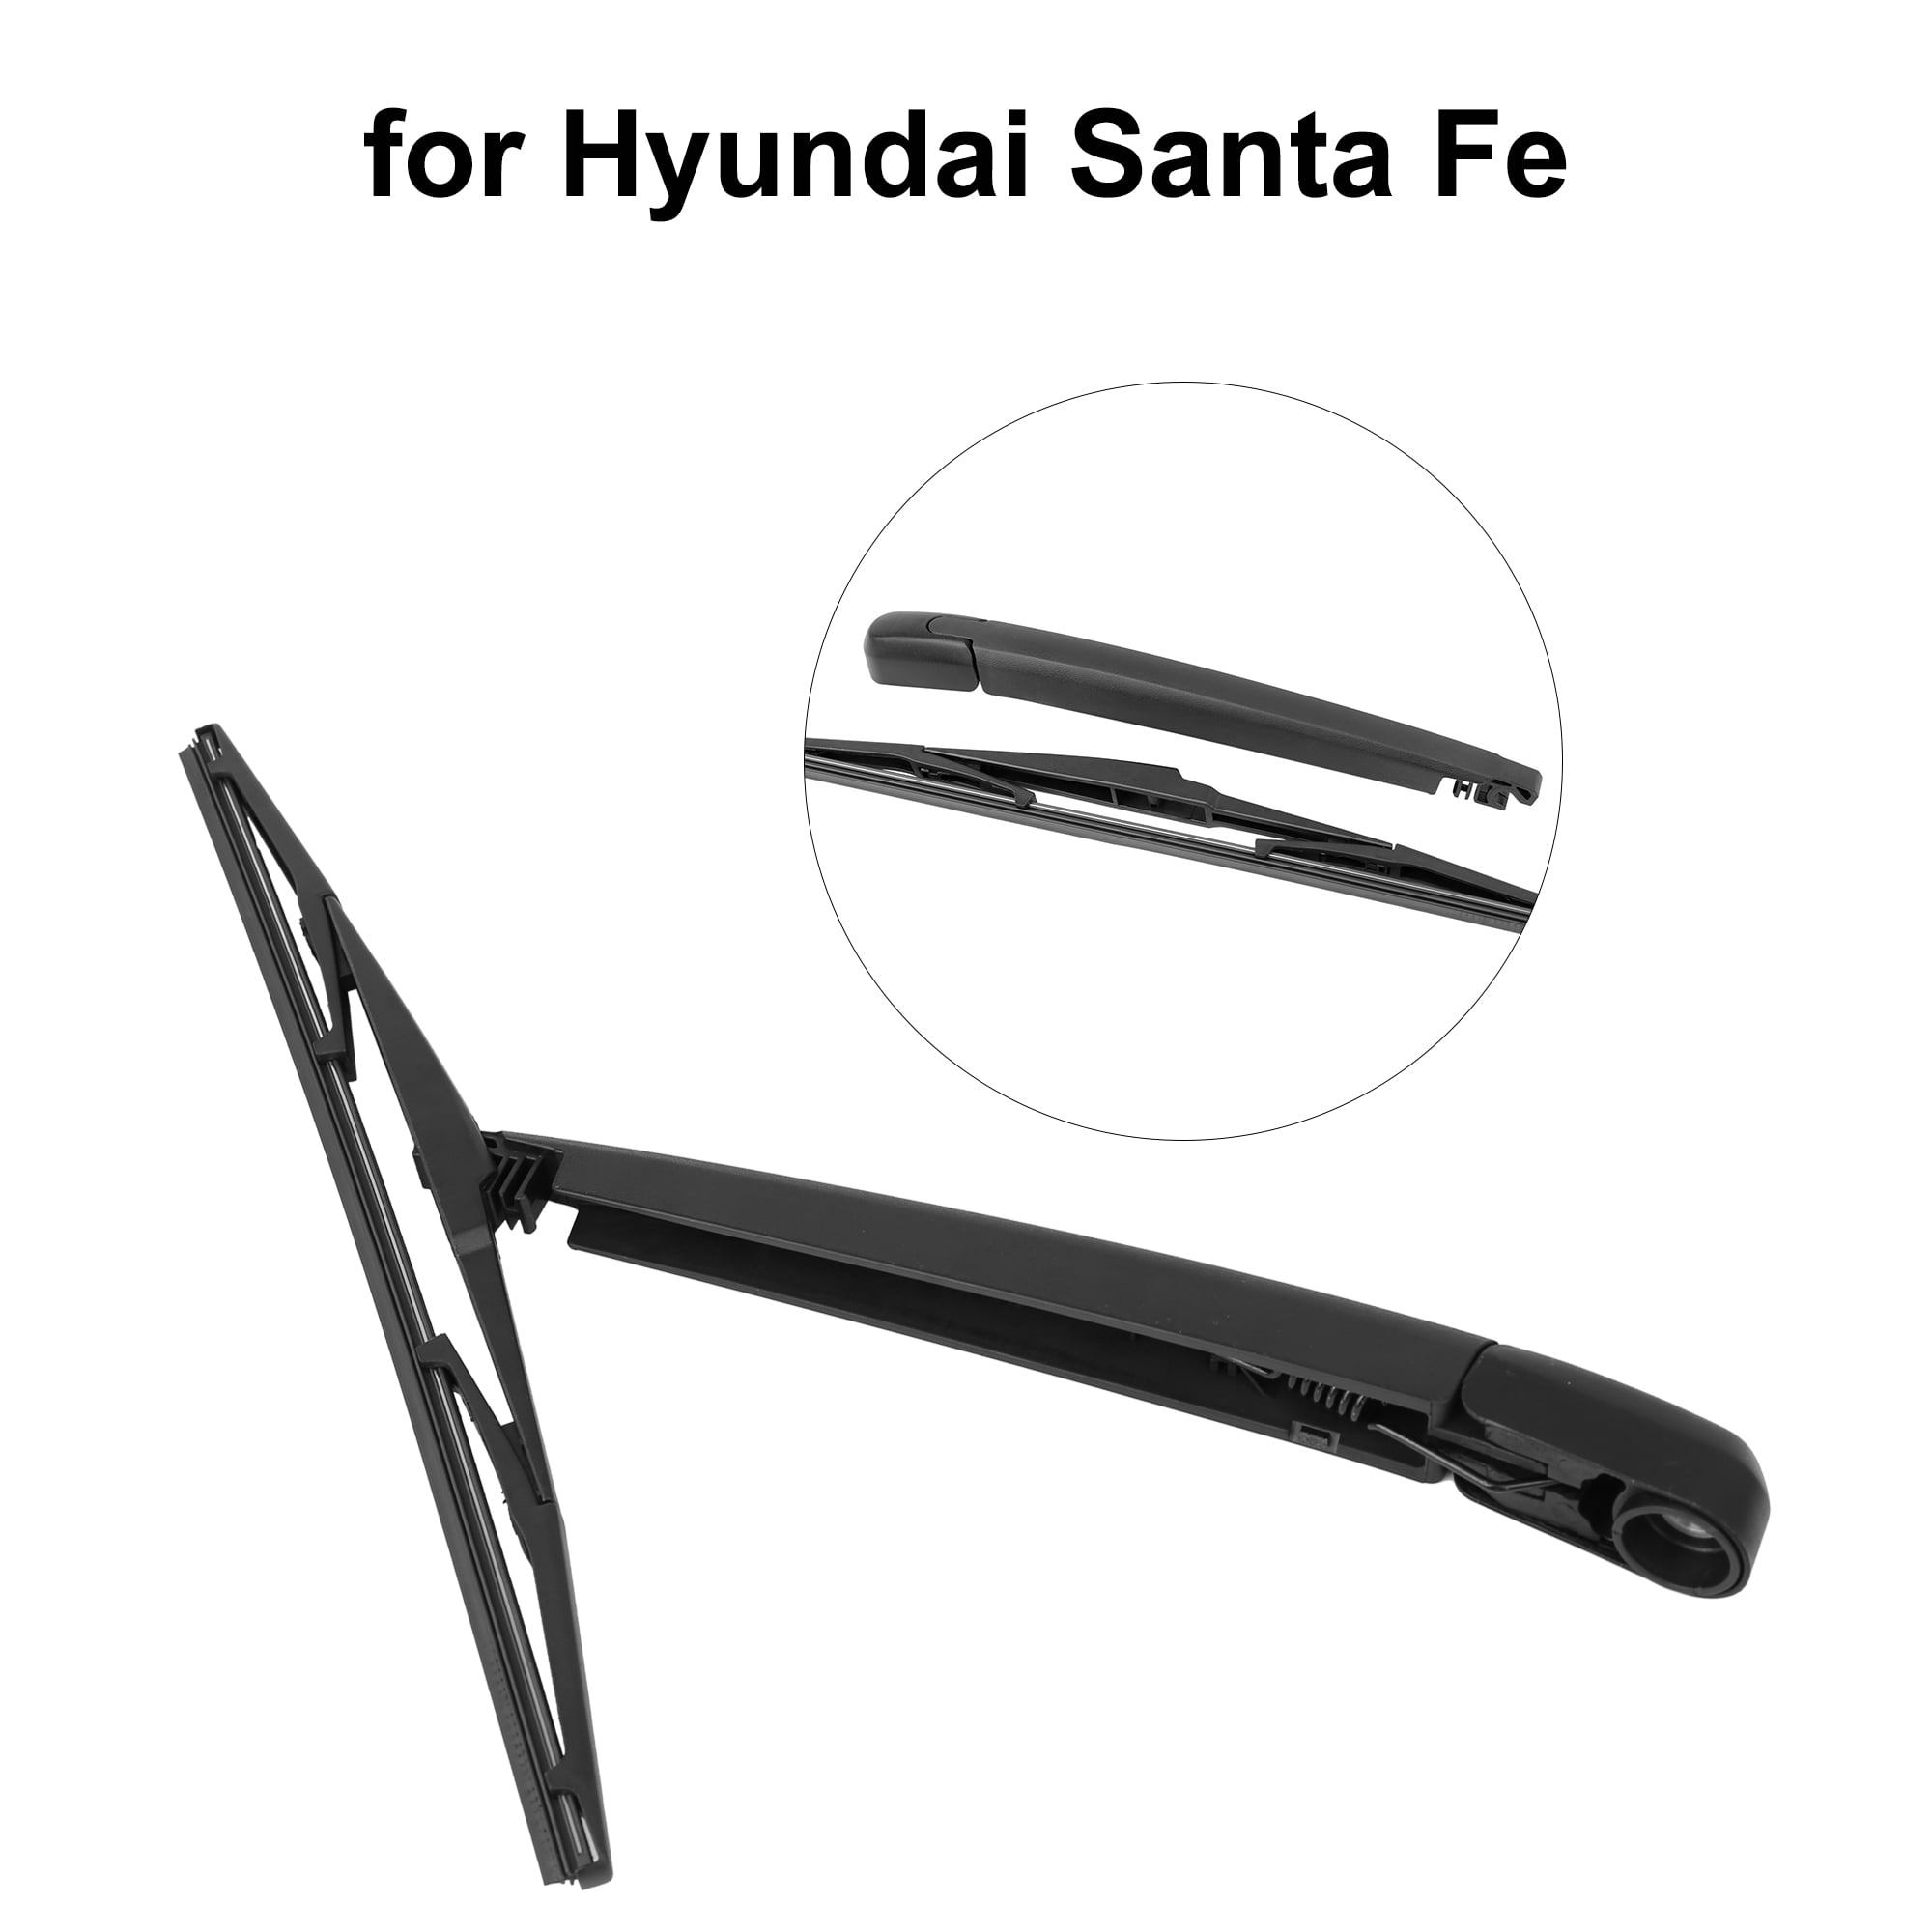 2009 Hyundai Santa Fe Windshield Wipers Size - Perfect Hyundai 2009 Hyundai Santa Fe Rear Wiper Blade Size